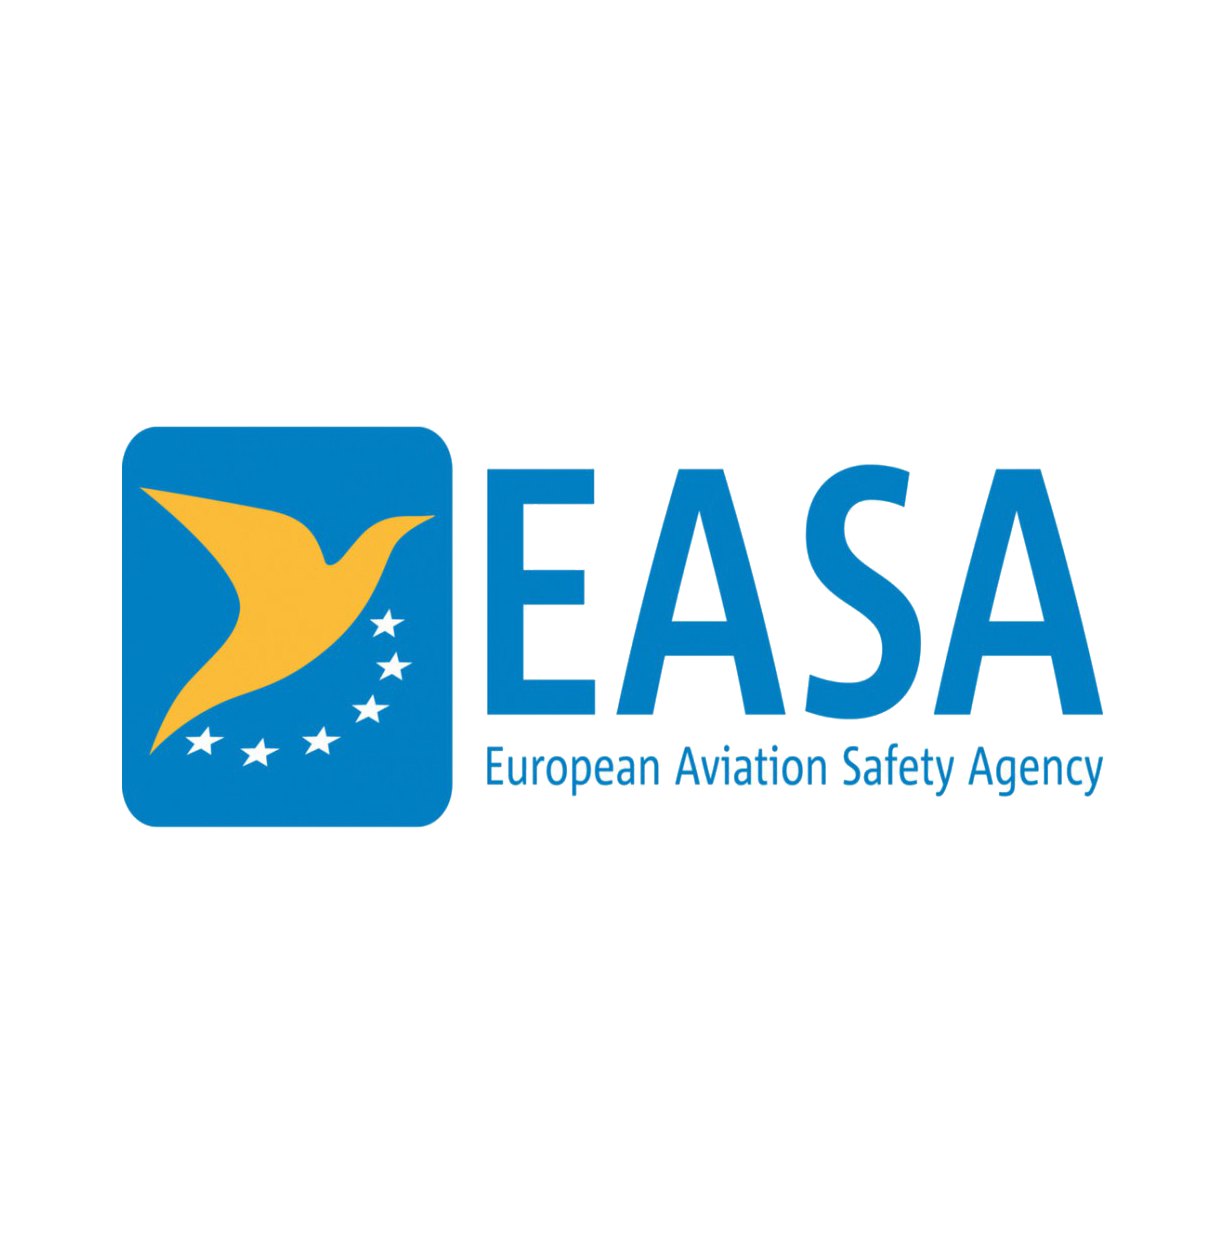 European Aviation Safety Agency logo